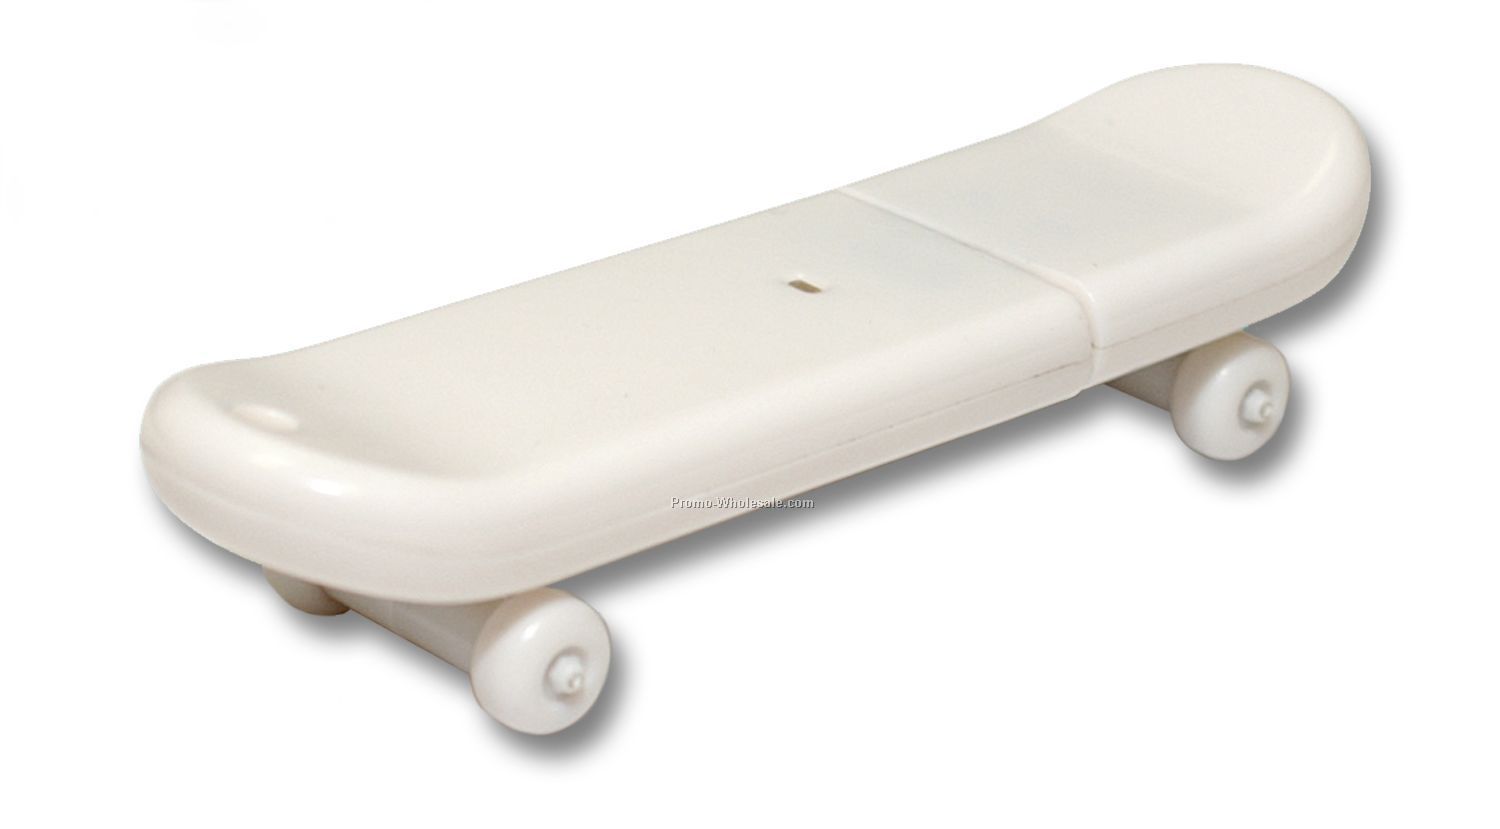 4gb Usb2.0 Skateboard Flash Drive - Rubber Coated White